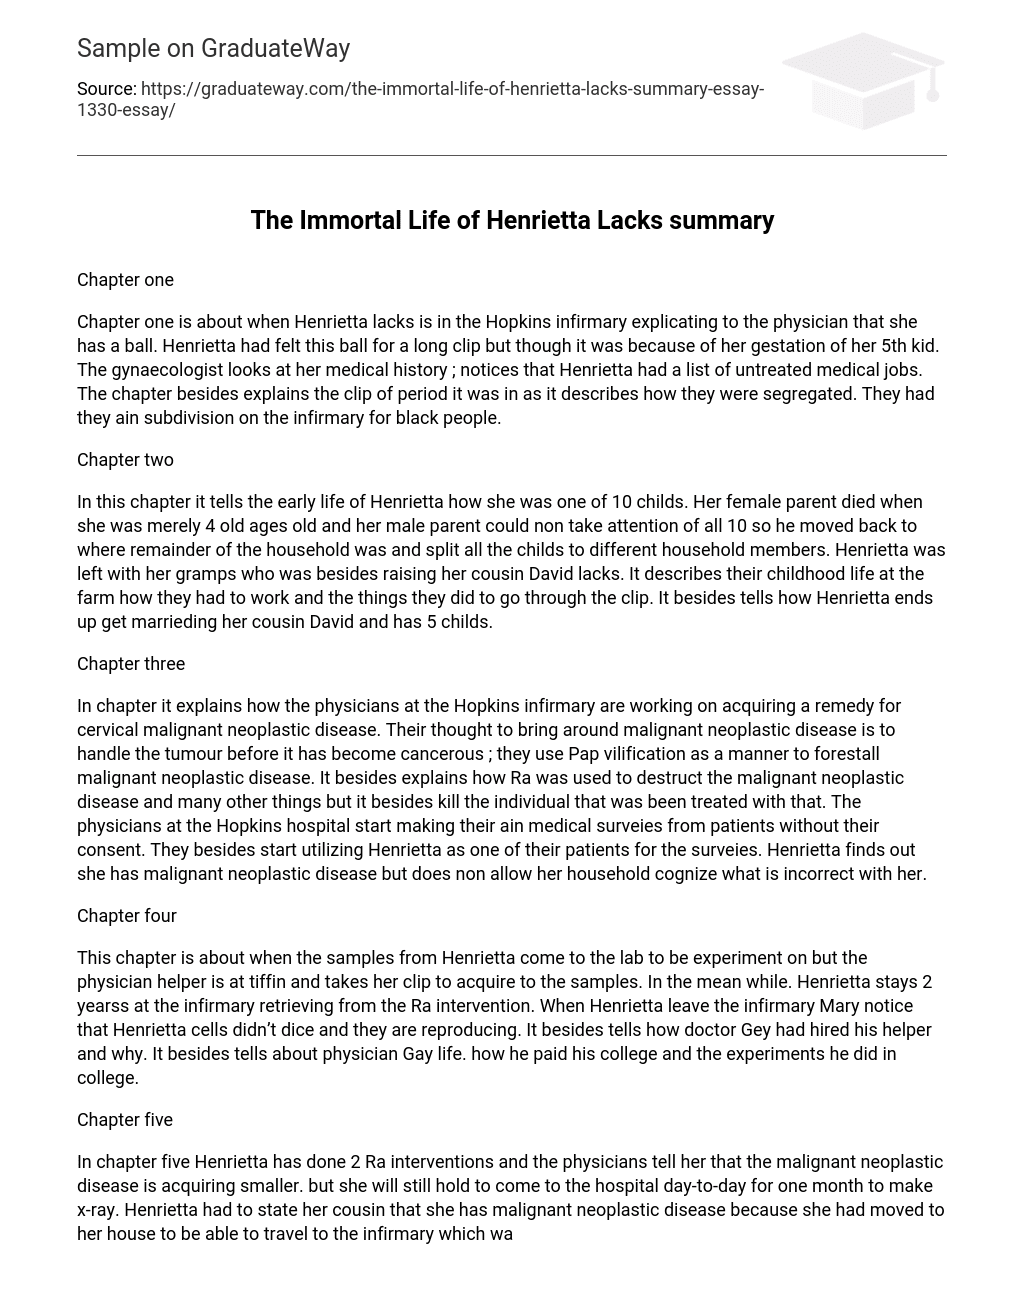 The Immortal Life of Henrietta Lacks summary